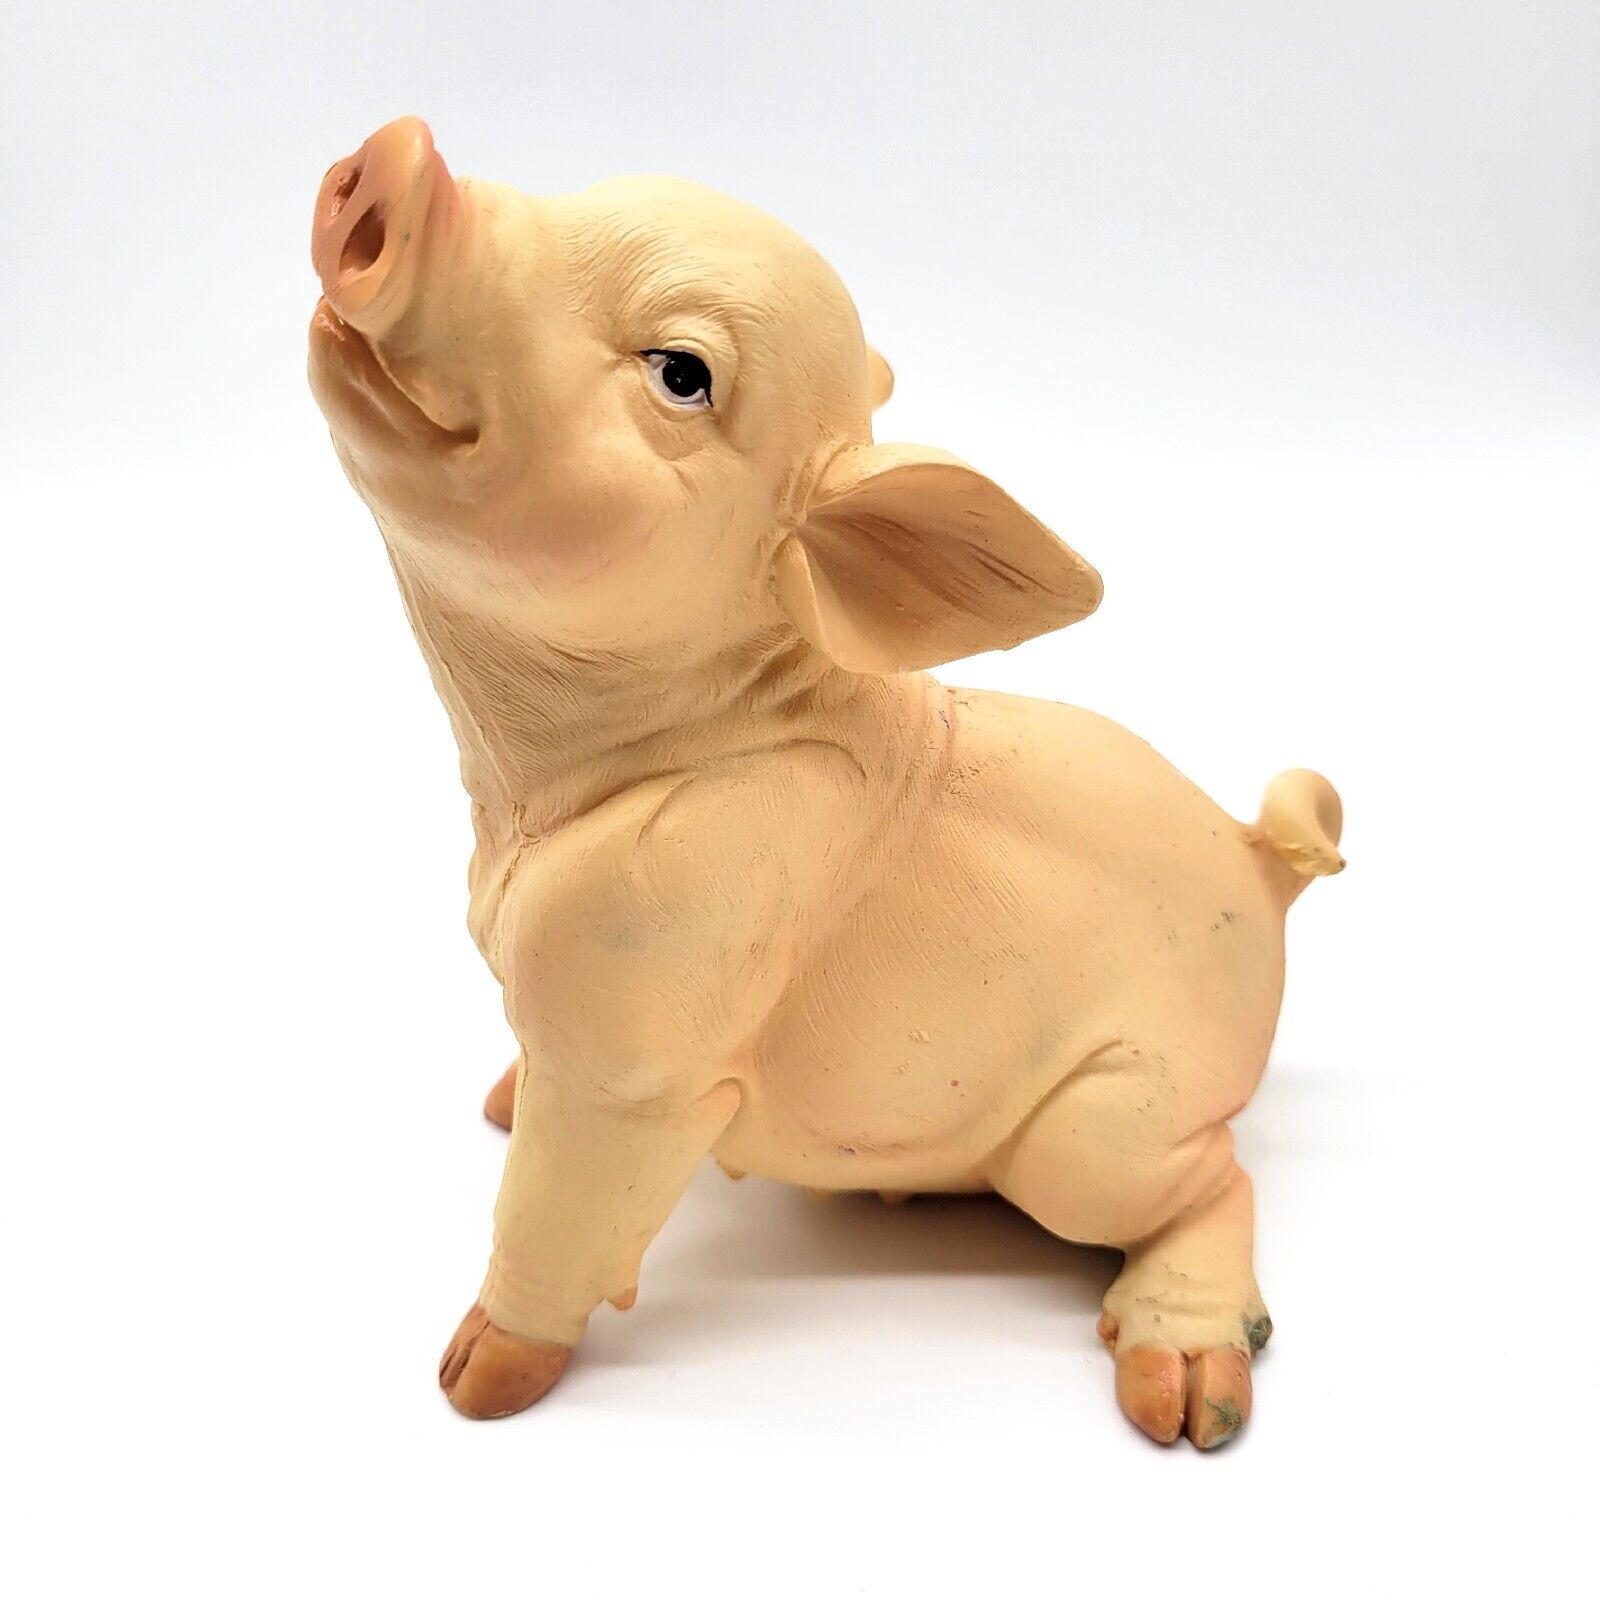 Vintage Plastic Toy Baby Pig  5